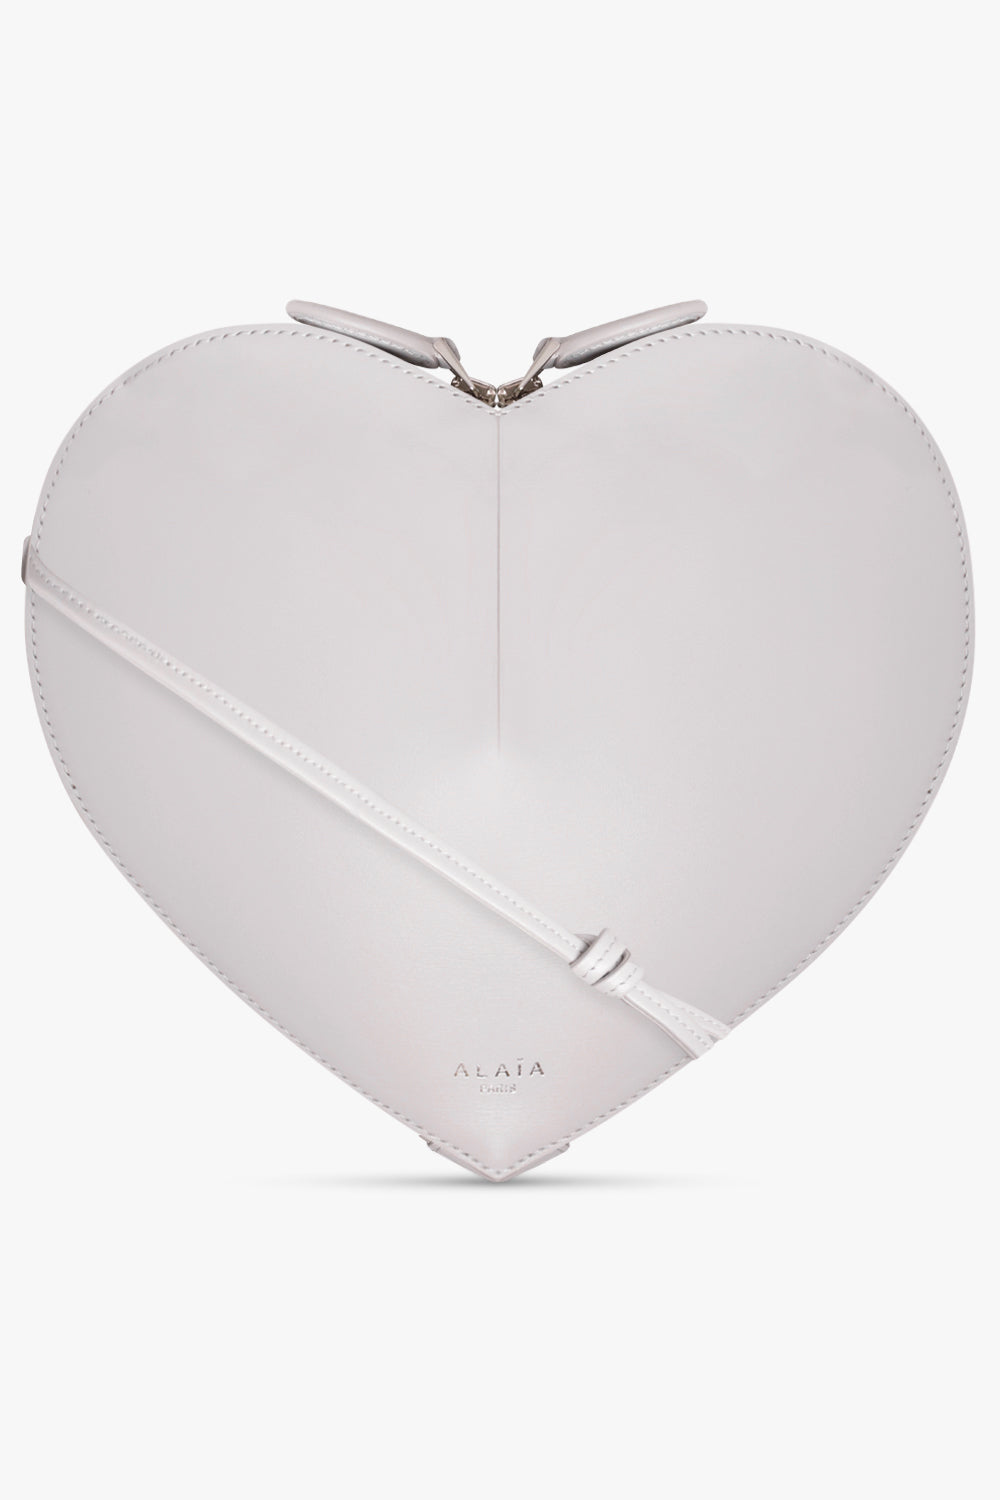 ALAIA BAGS GREY / 826 - GRIS PERLE Le Coeur Heart Shaped Bag | Grey